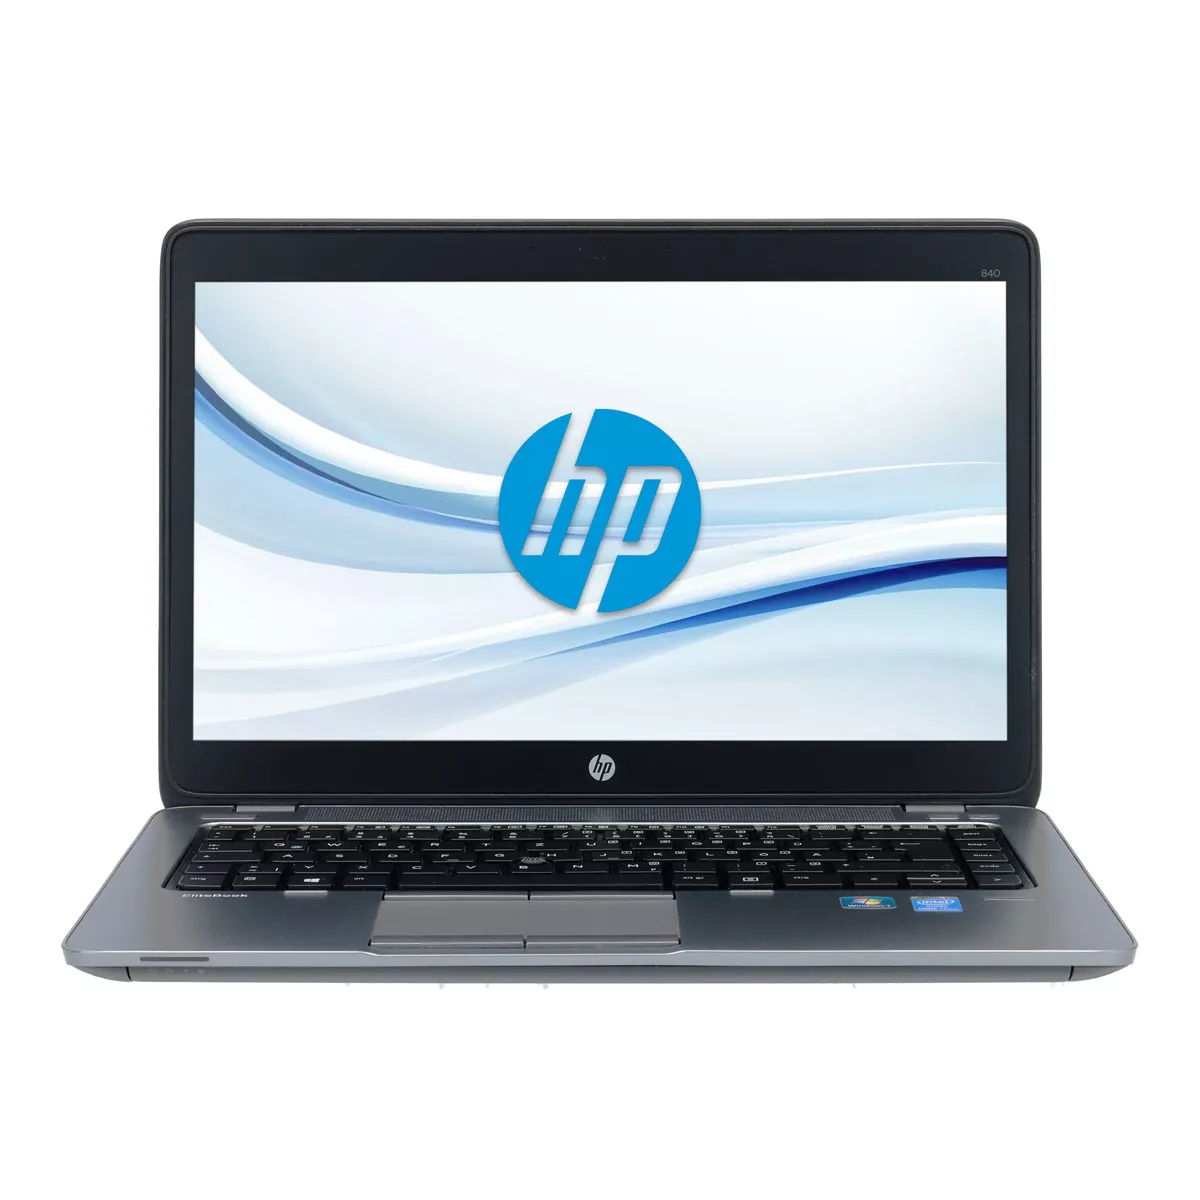 HP EliteBook 840 G2 Core i5 5300U 8 GB 240 GB SSD Webcam B